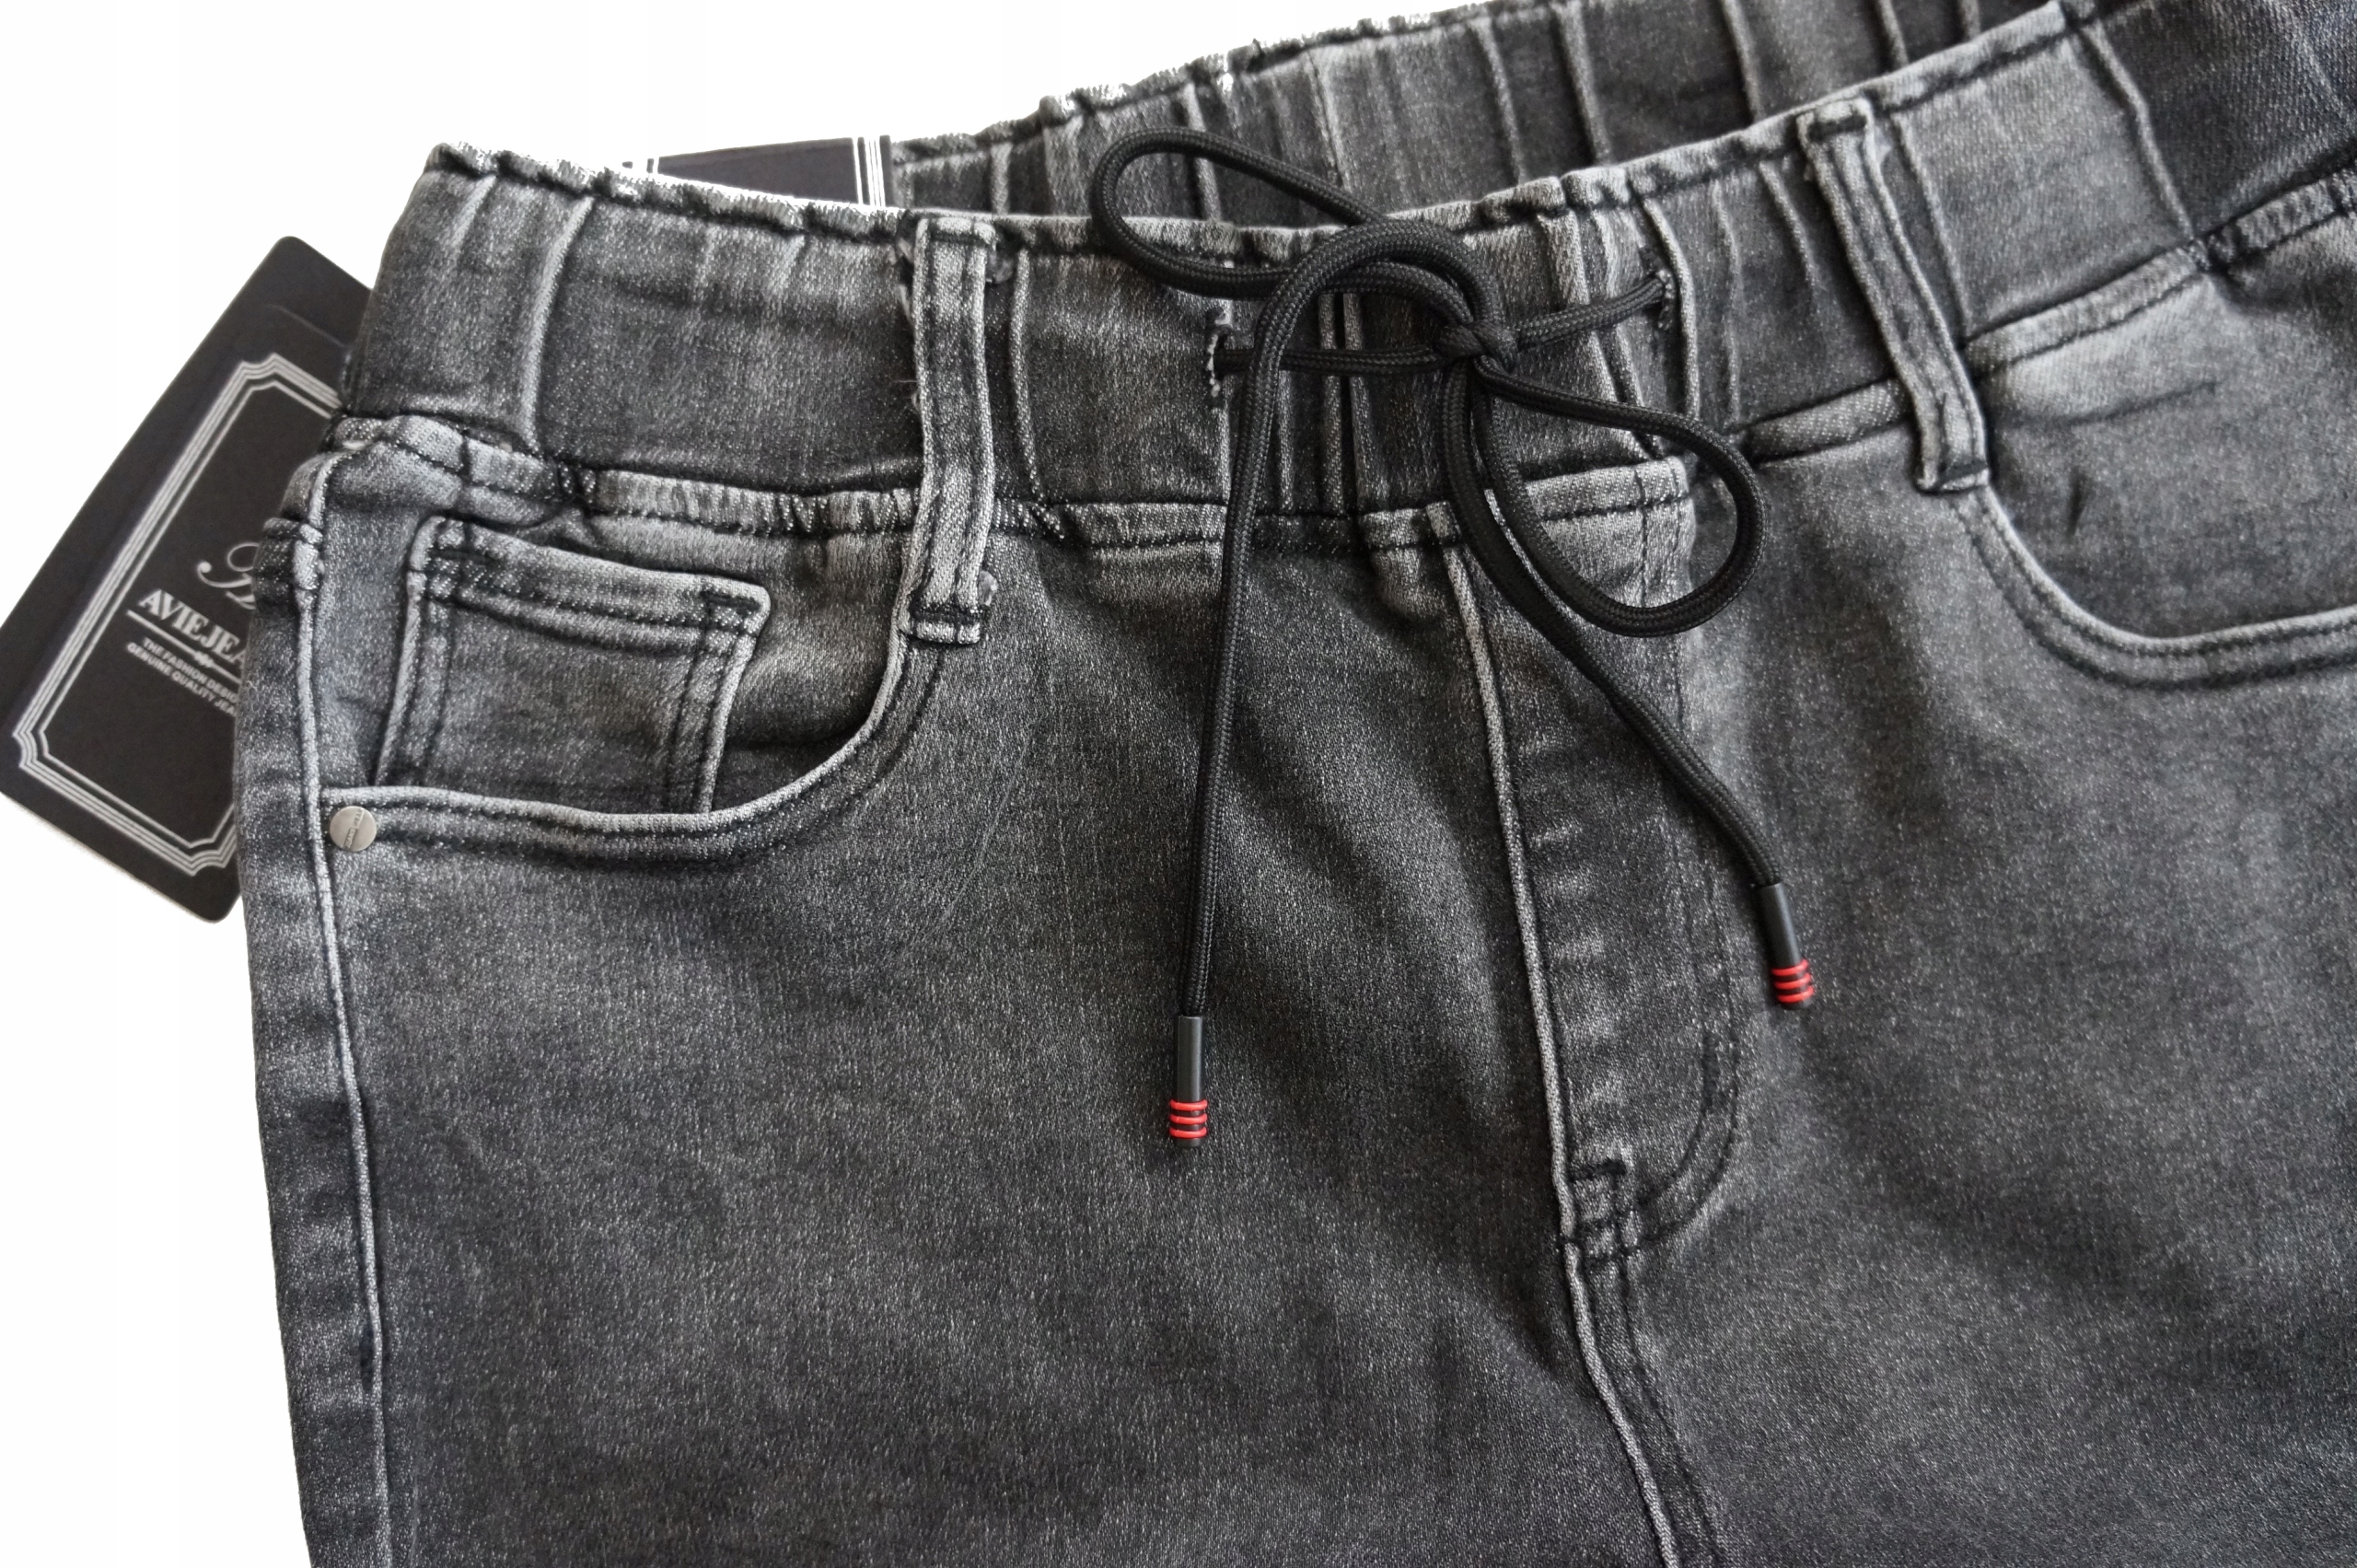 tujkama_AVIE брюки джинсы на резинке / резинка завязанная Colour Black grey, silver